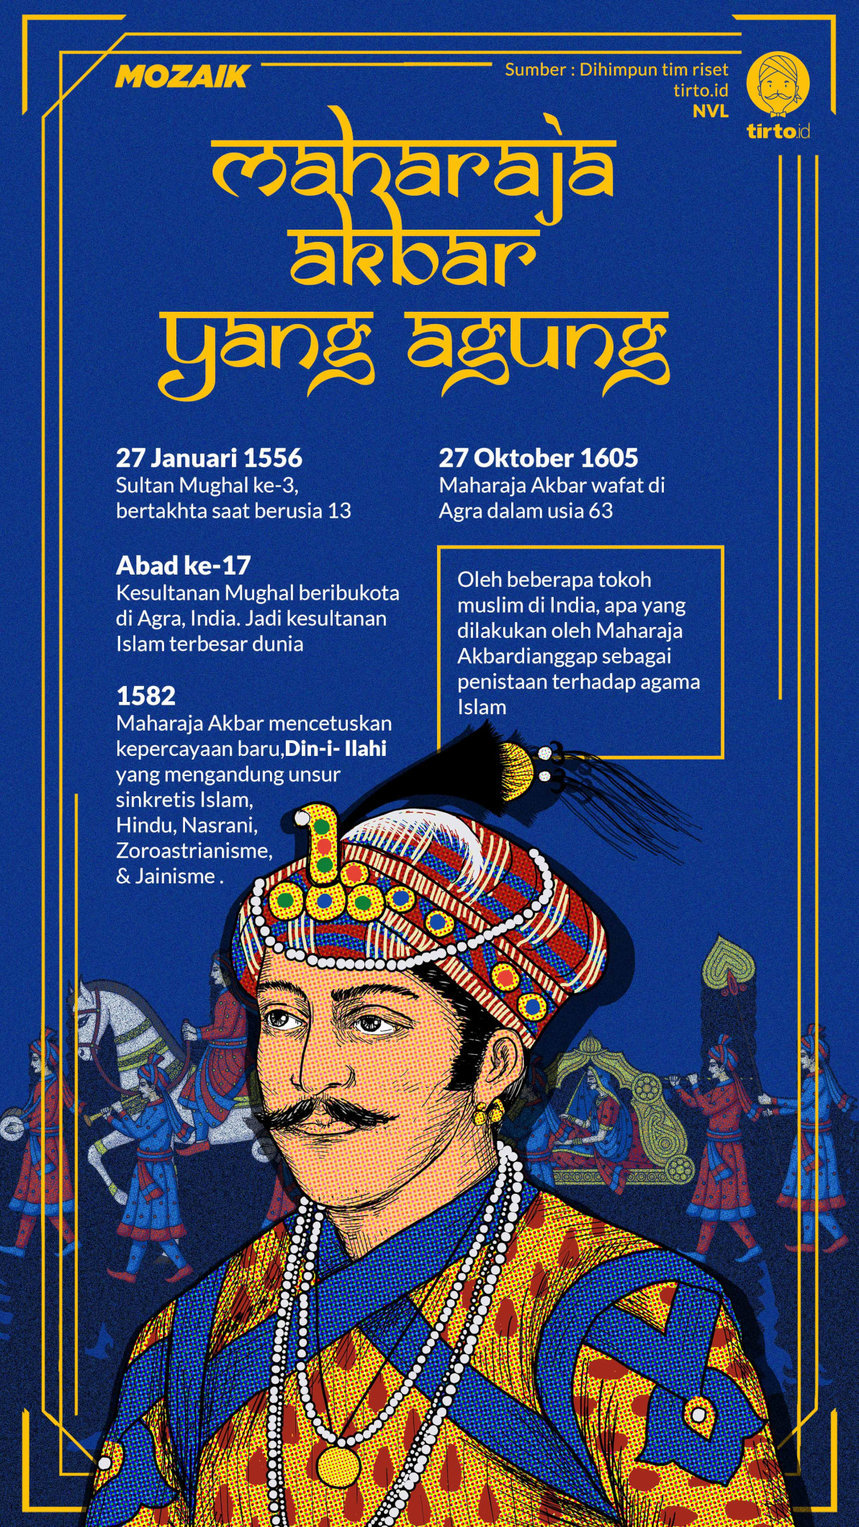 Infografik Mozaik Kaisar Akbar 3